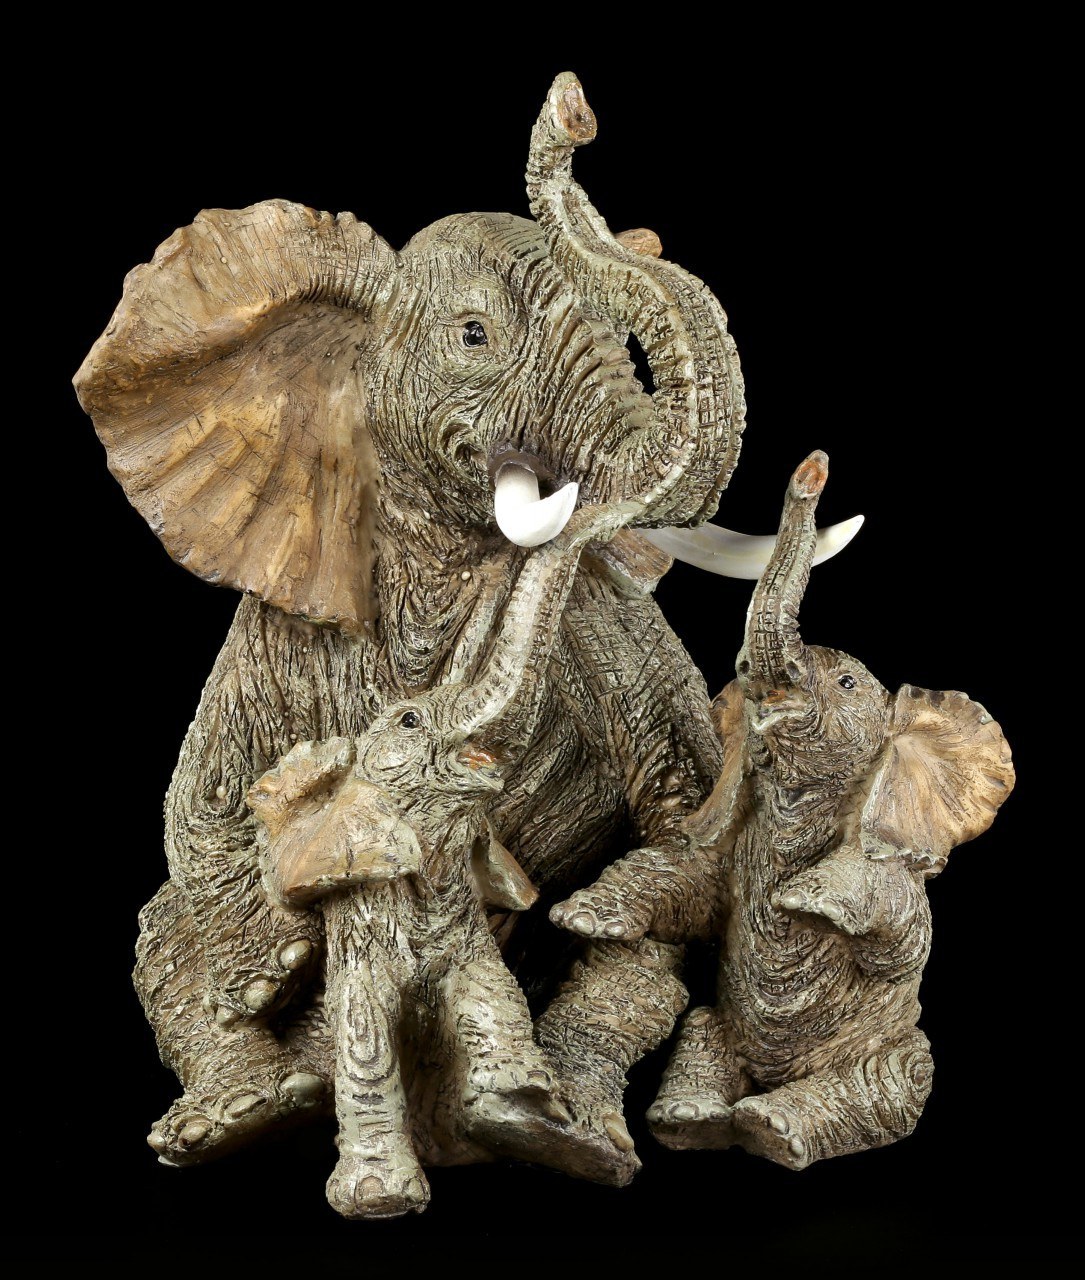 Elephant Family Figurine - Hooting is Fun